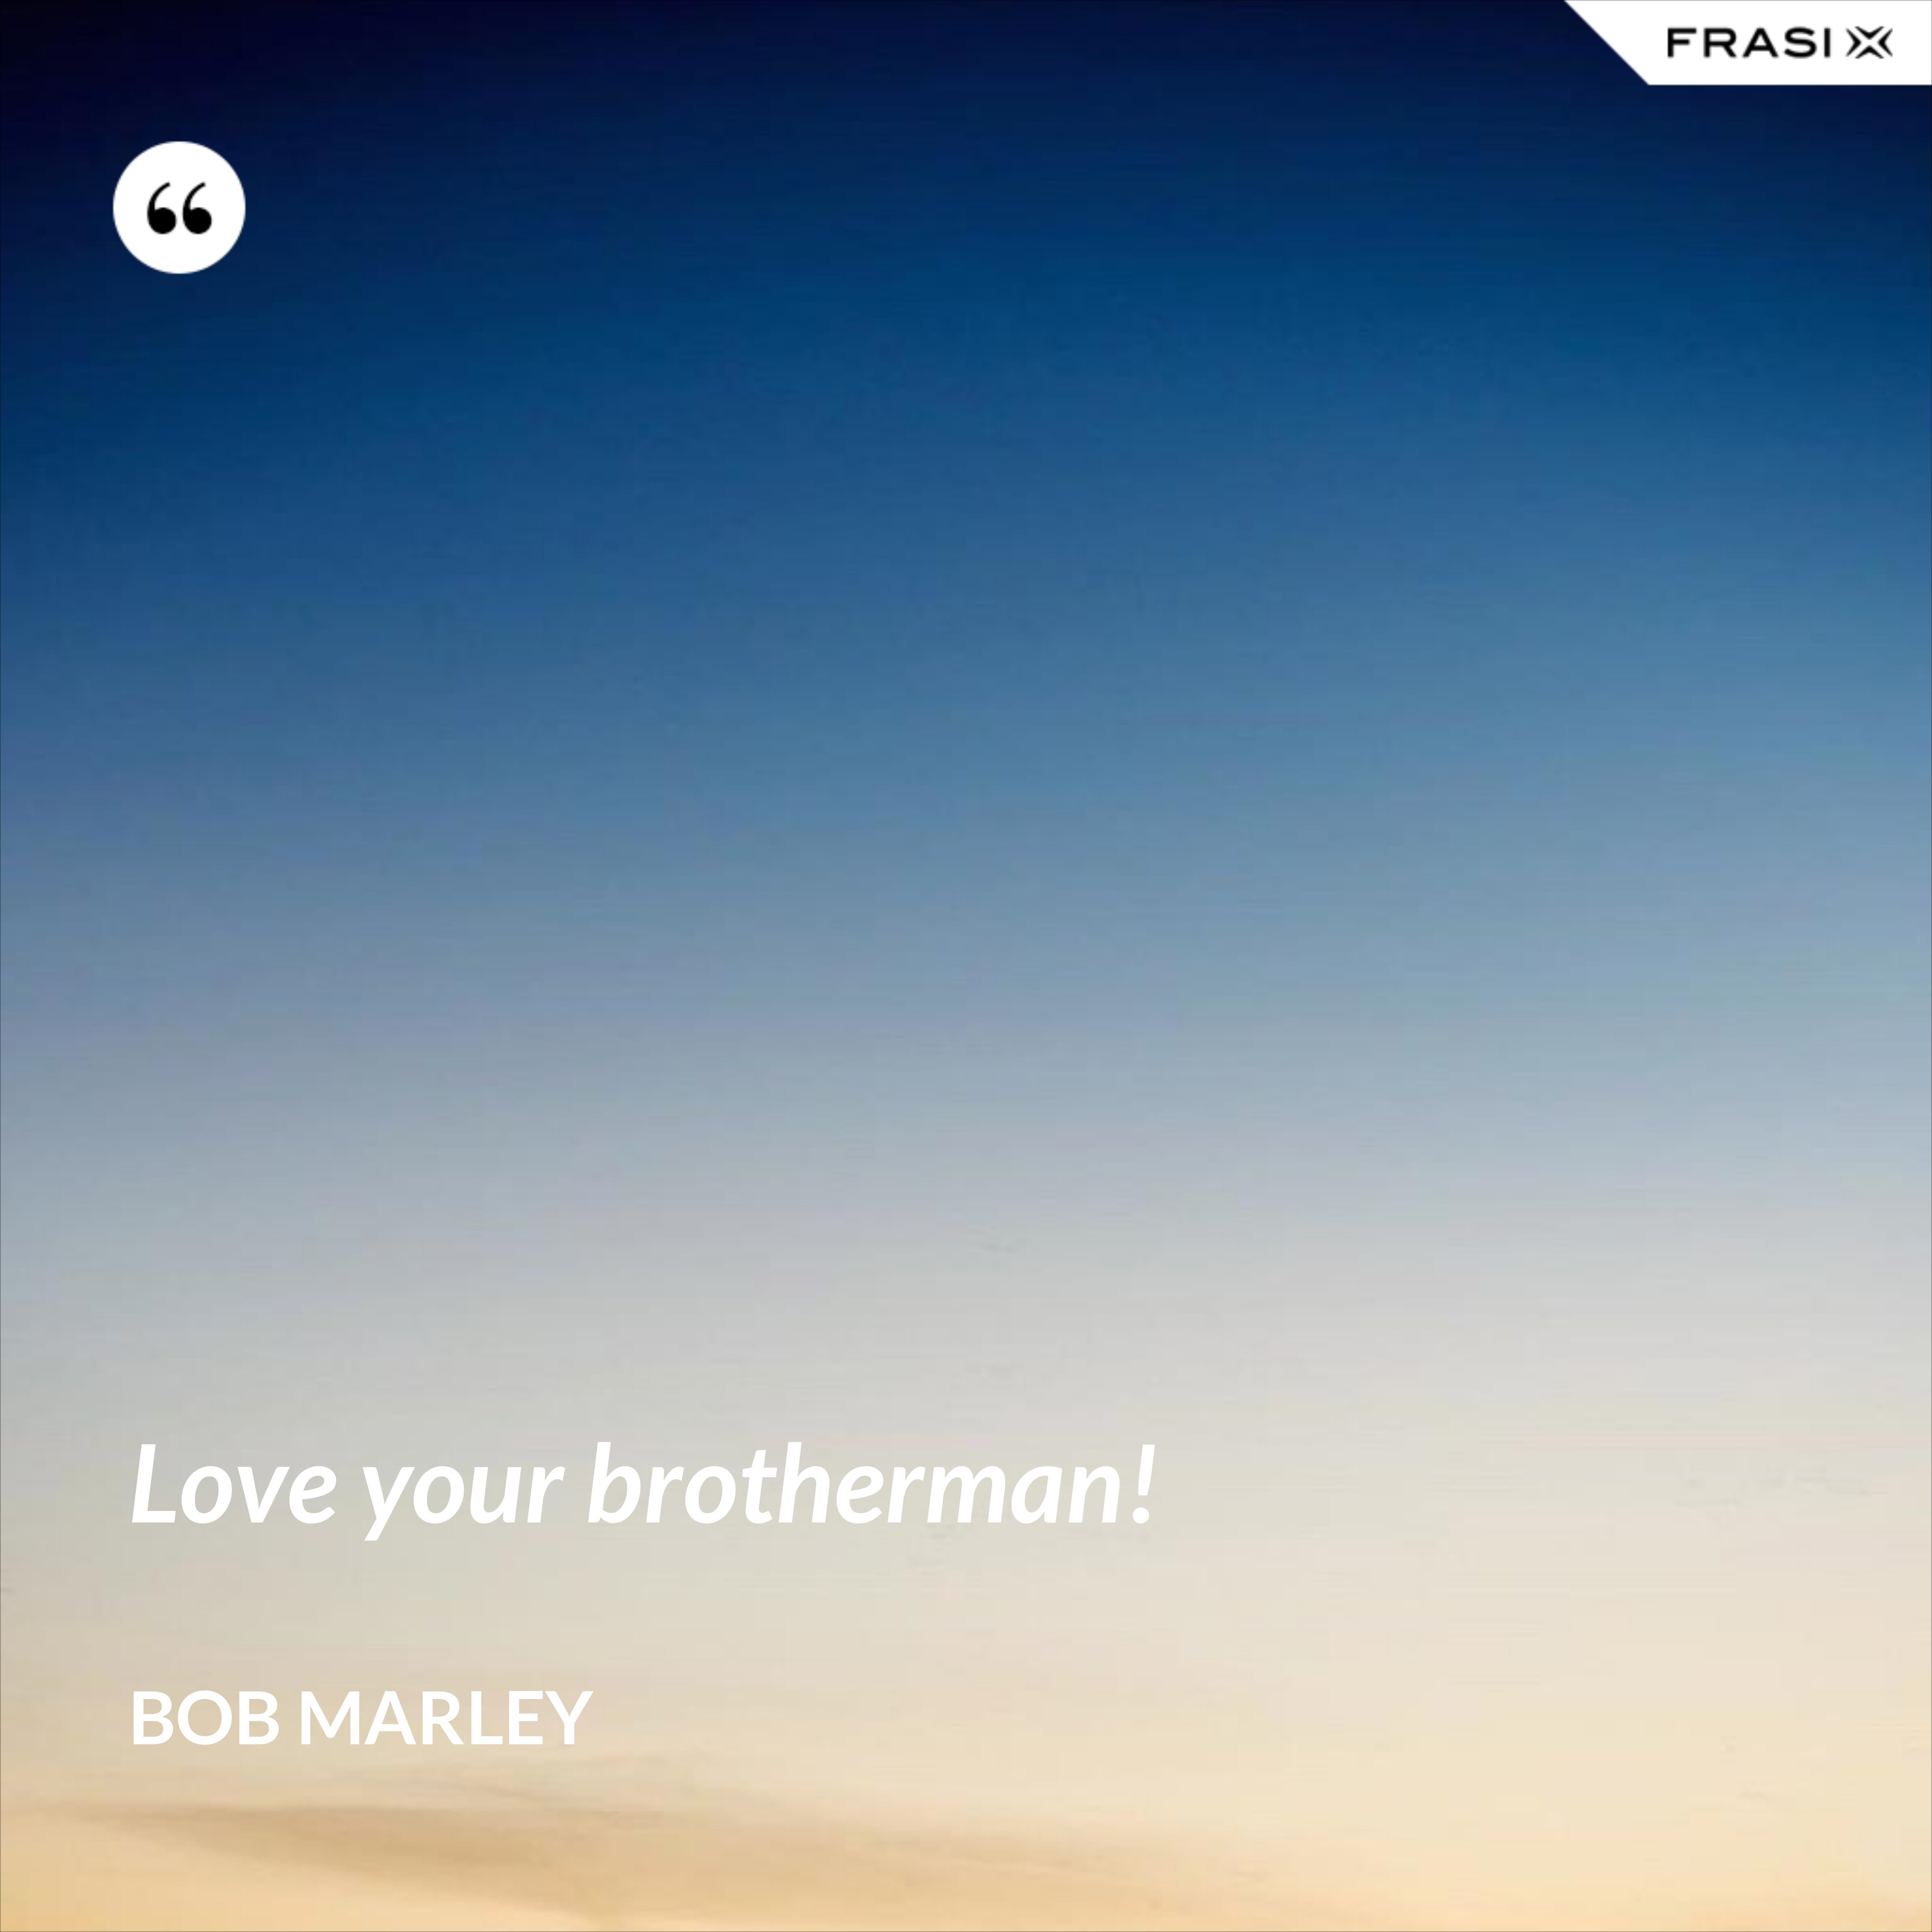 Love your brotherman! - Bob Marley